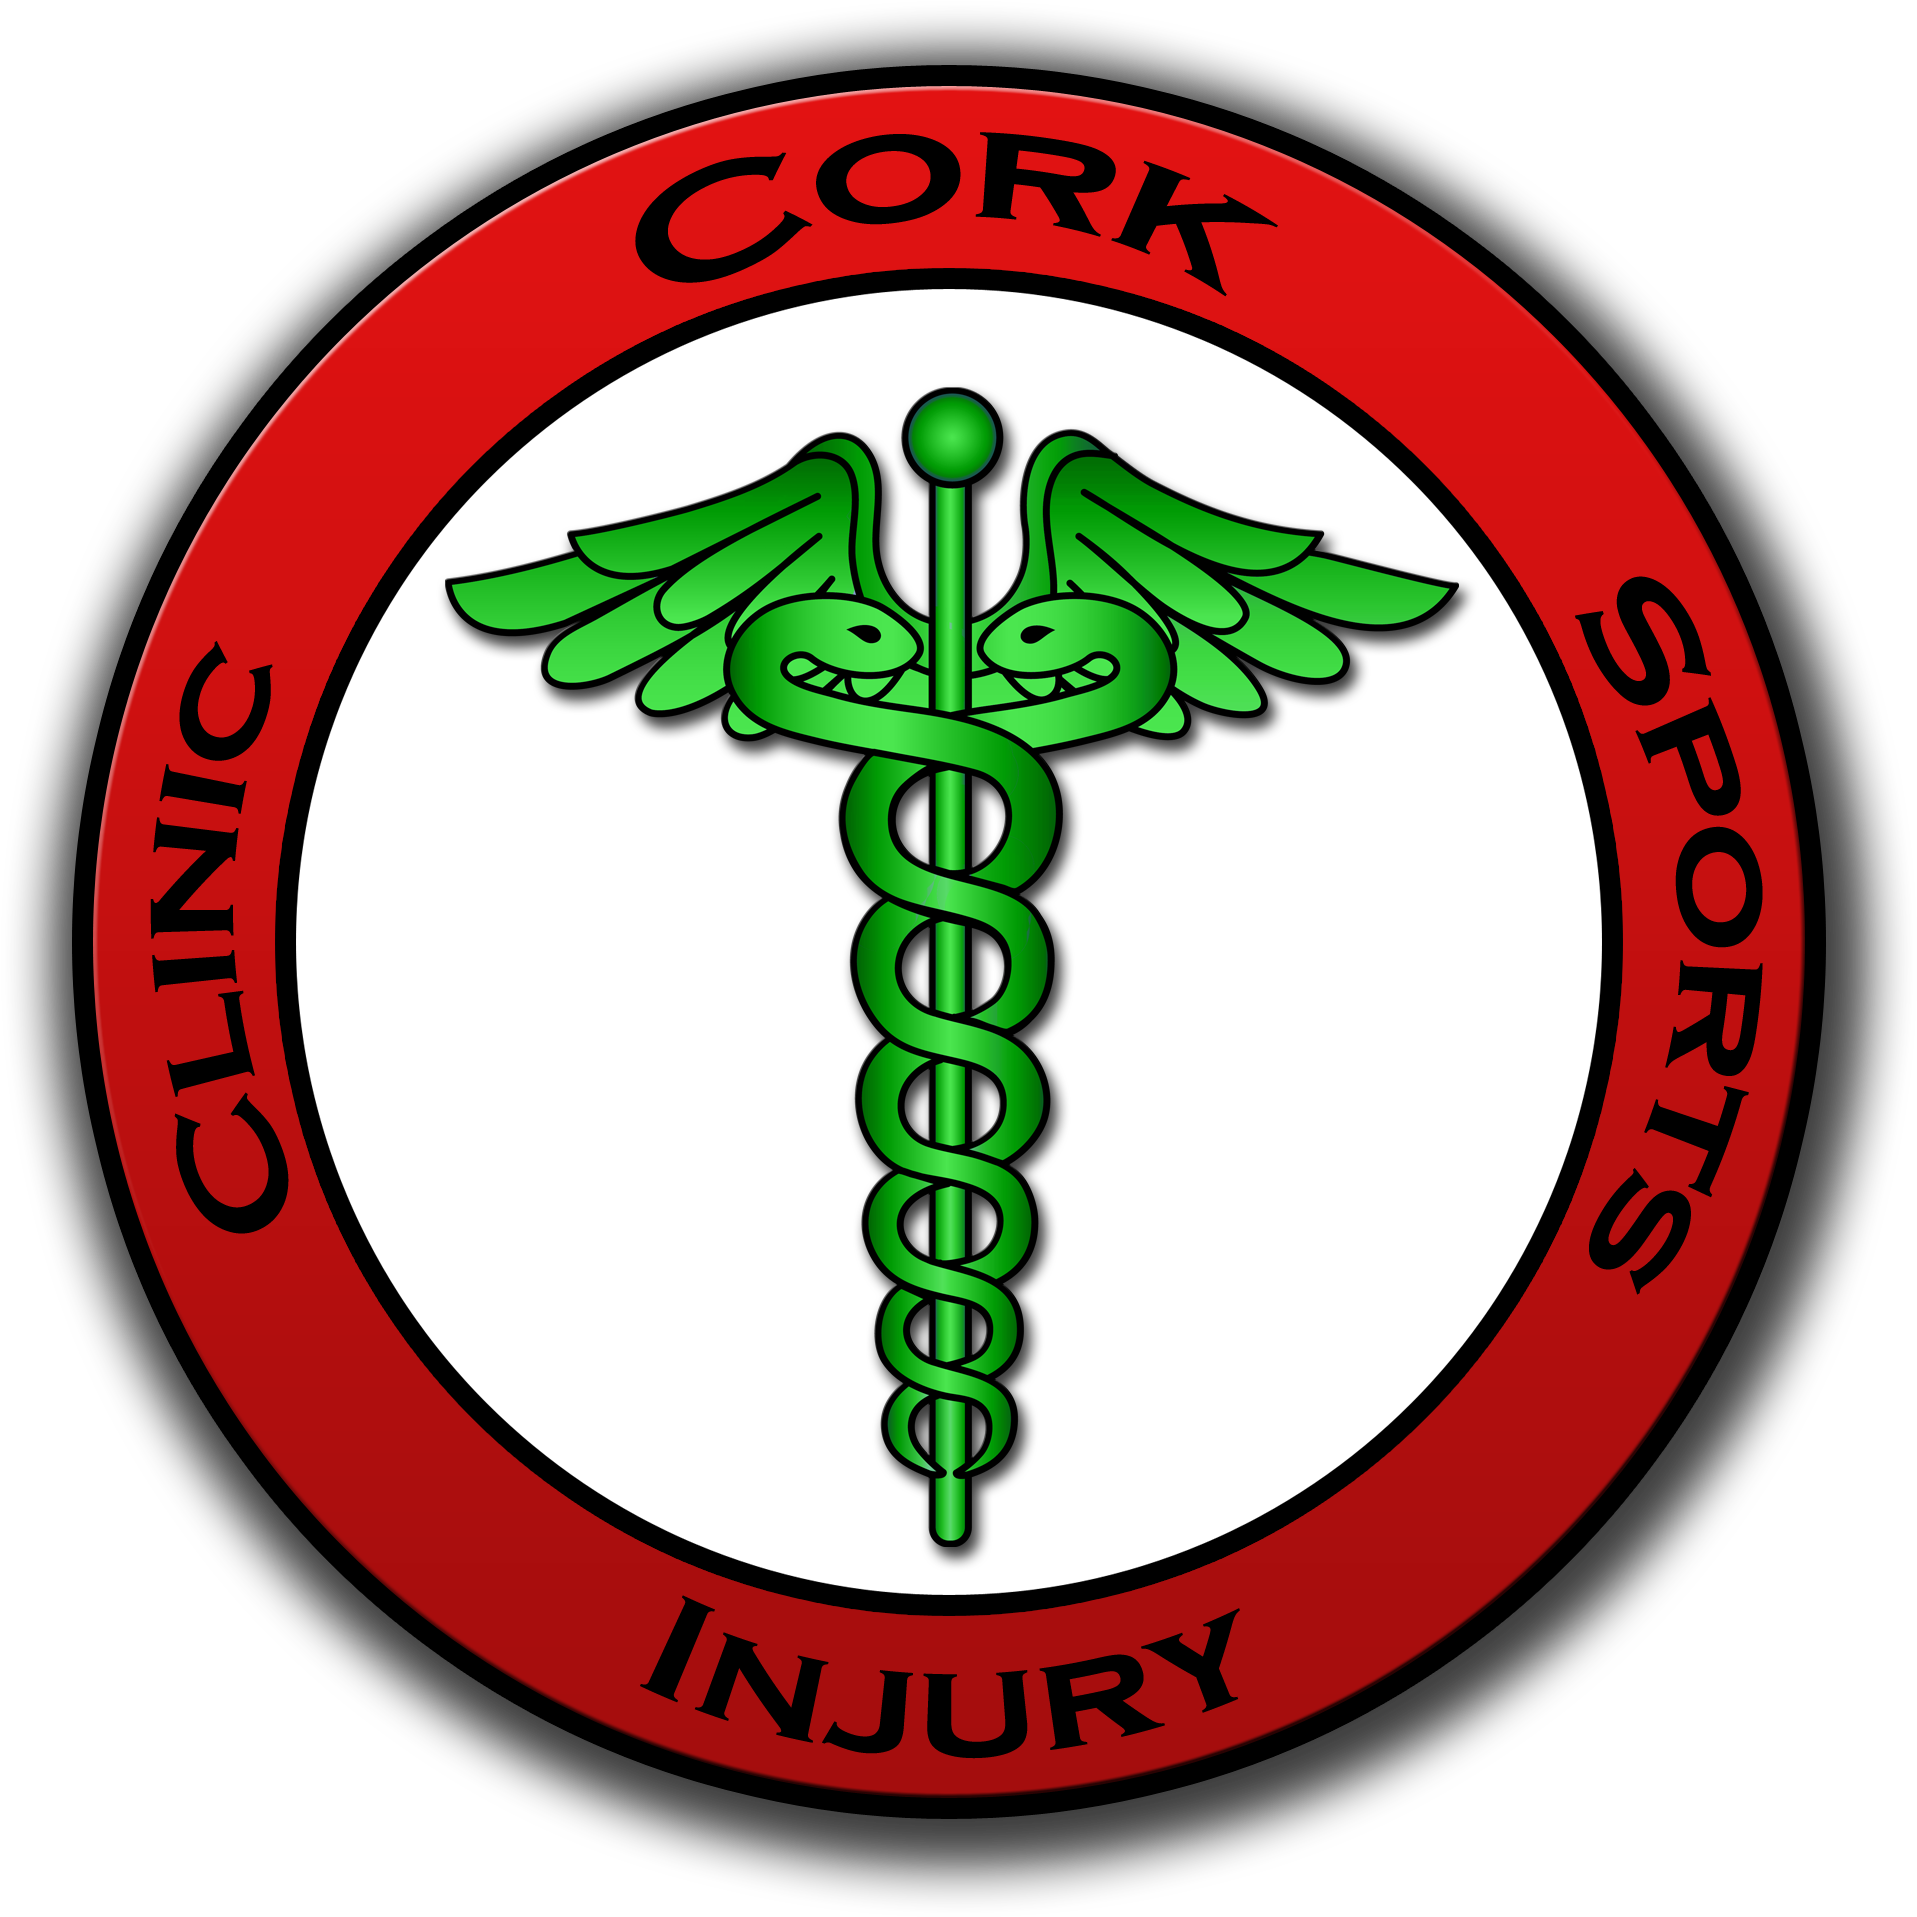 Cork Logo Large - Beck's Triad Mnemonic - Free Transparent PNG Download ...